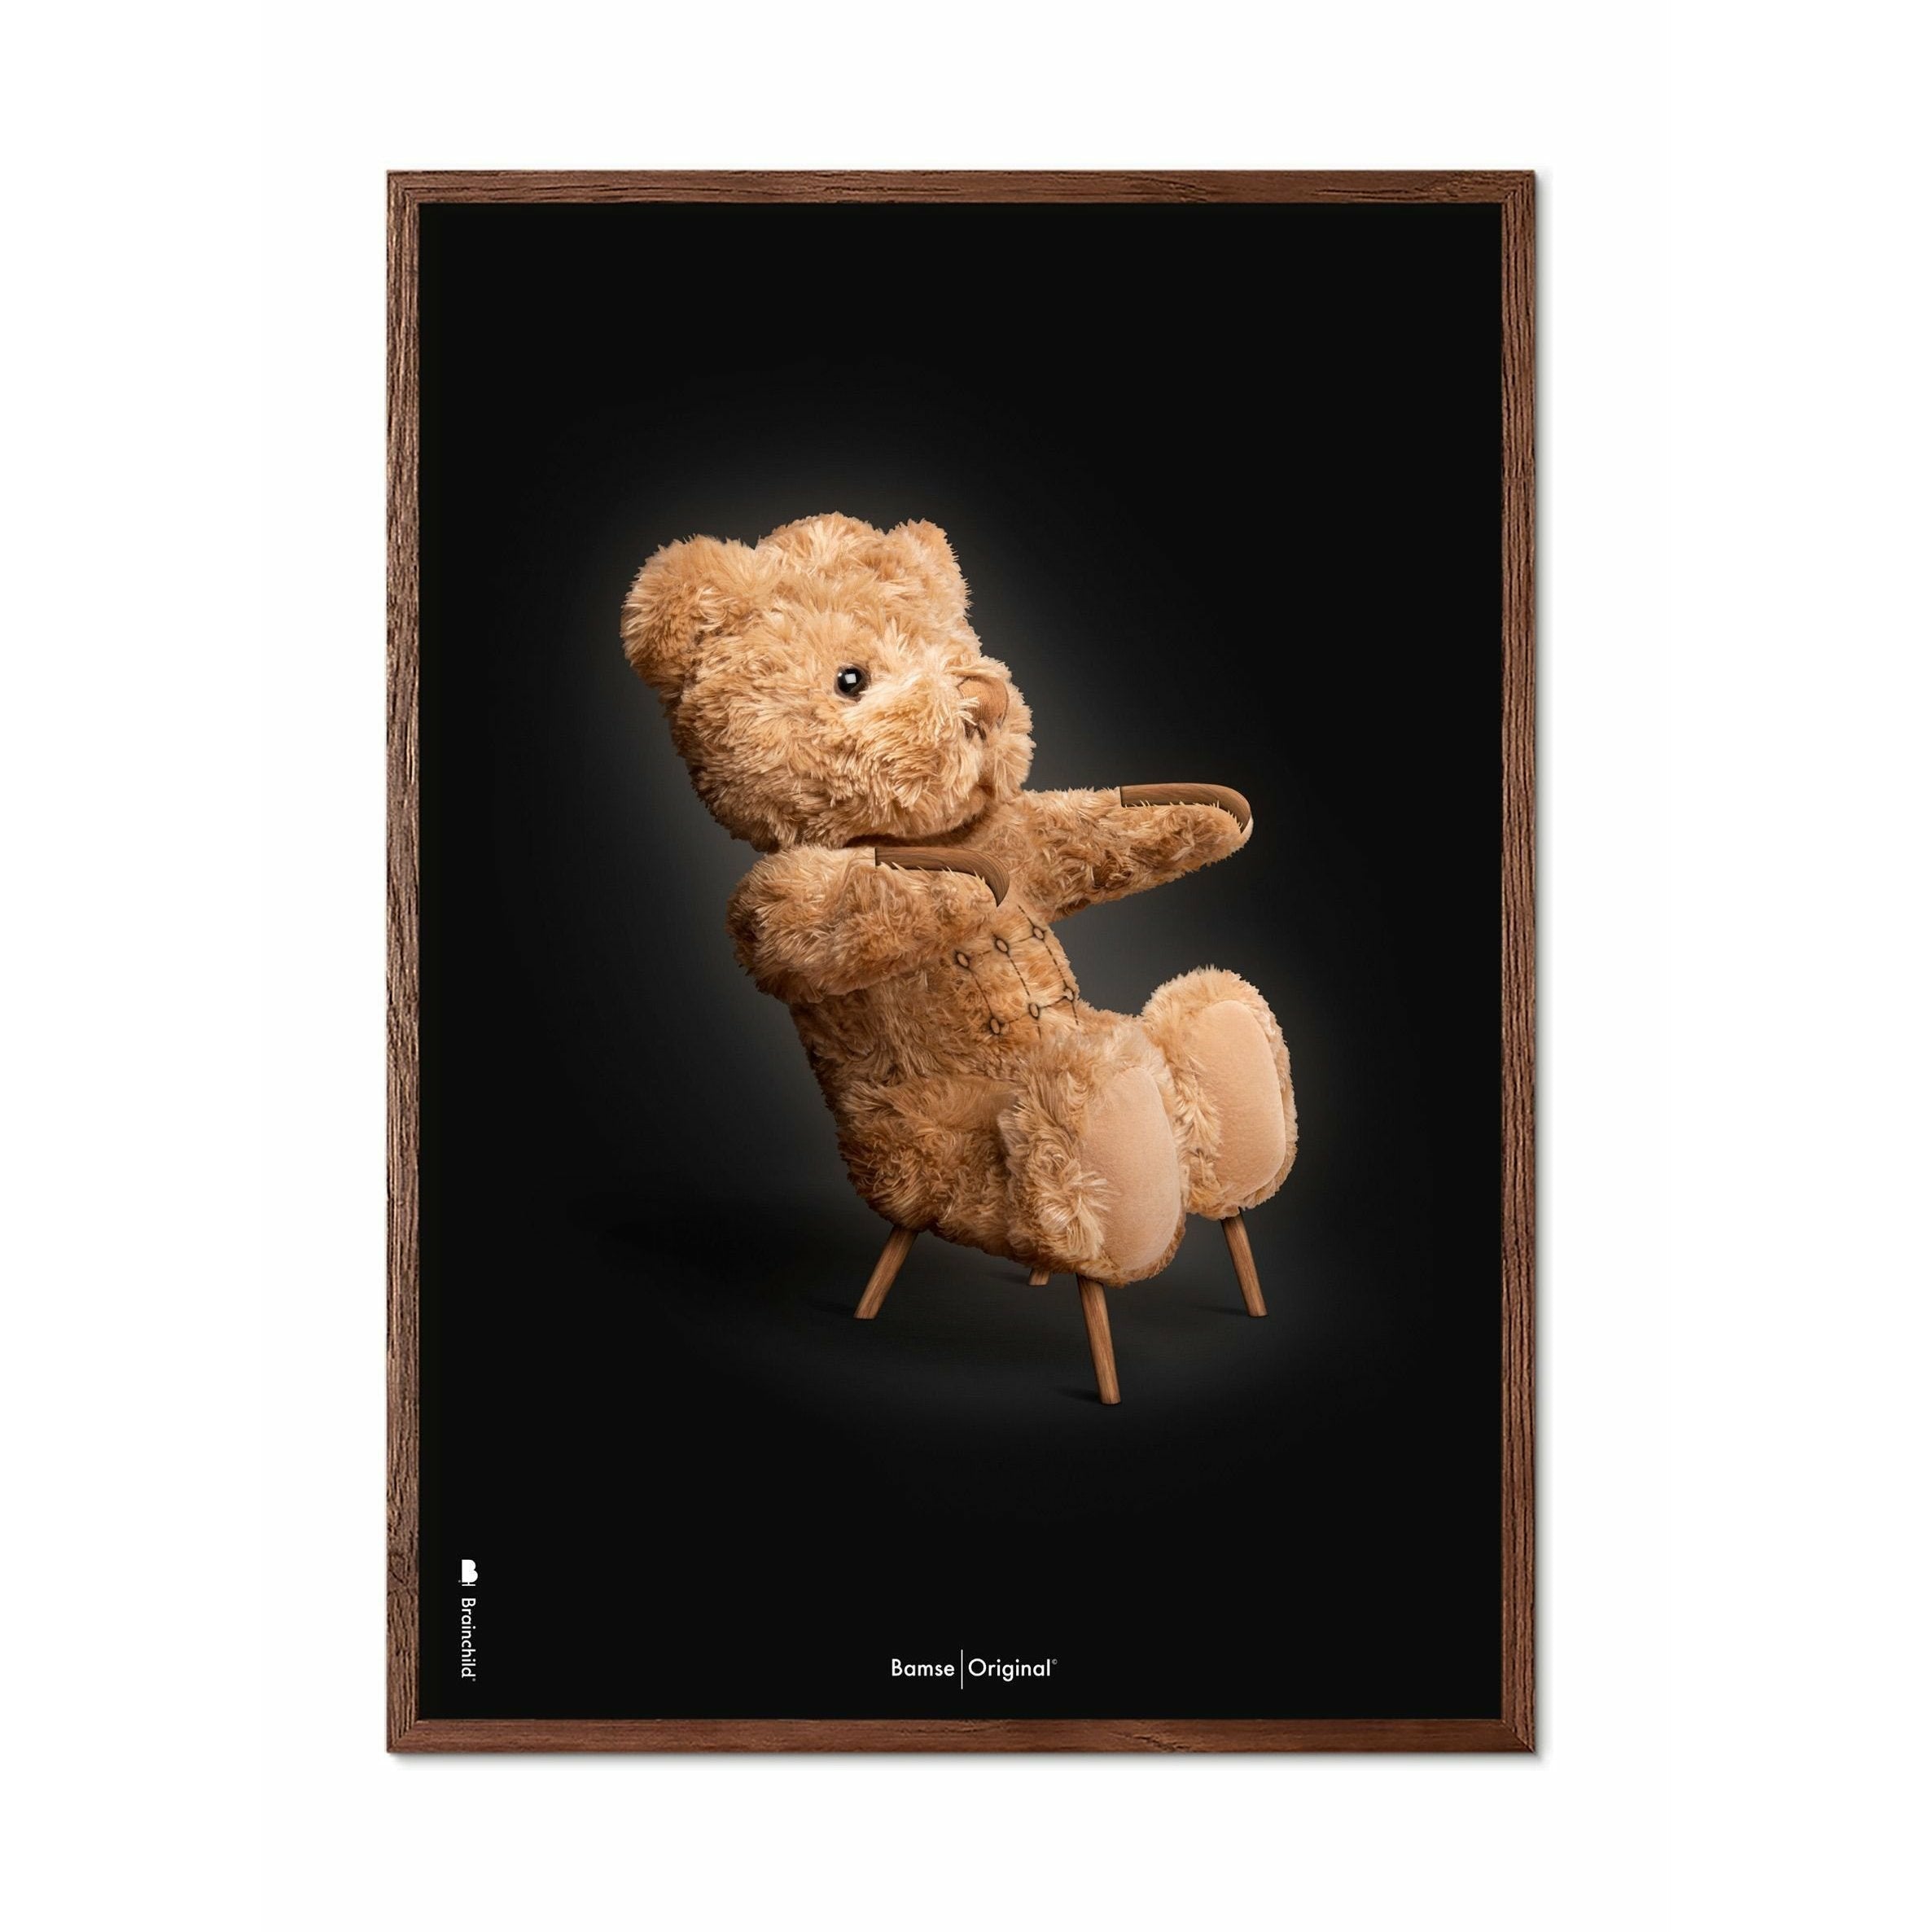 Brainchild Teddy Bear Classic Poster, Frame Made Of Dark Wood 30x40 Cm, Black Background